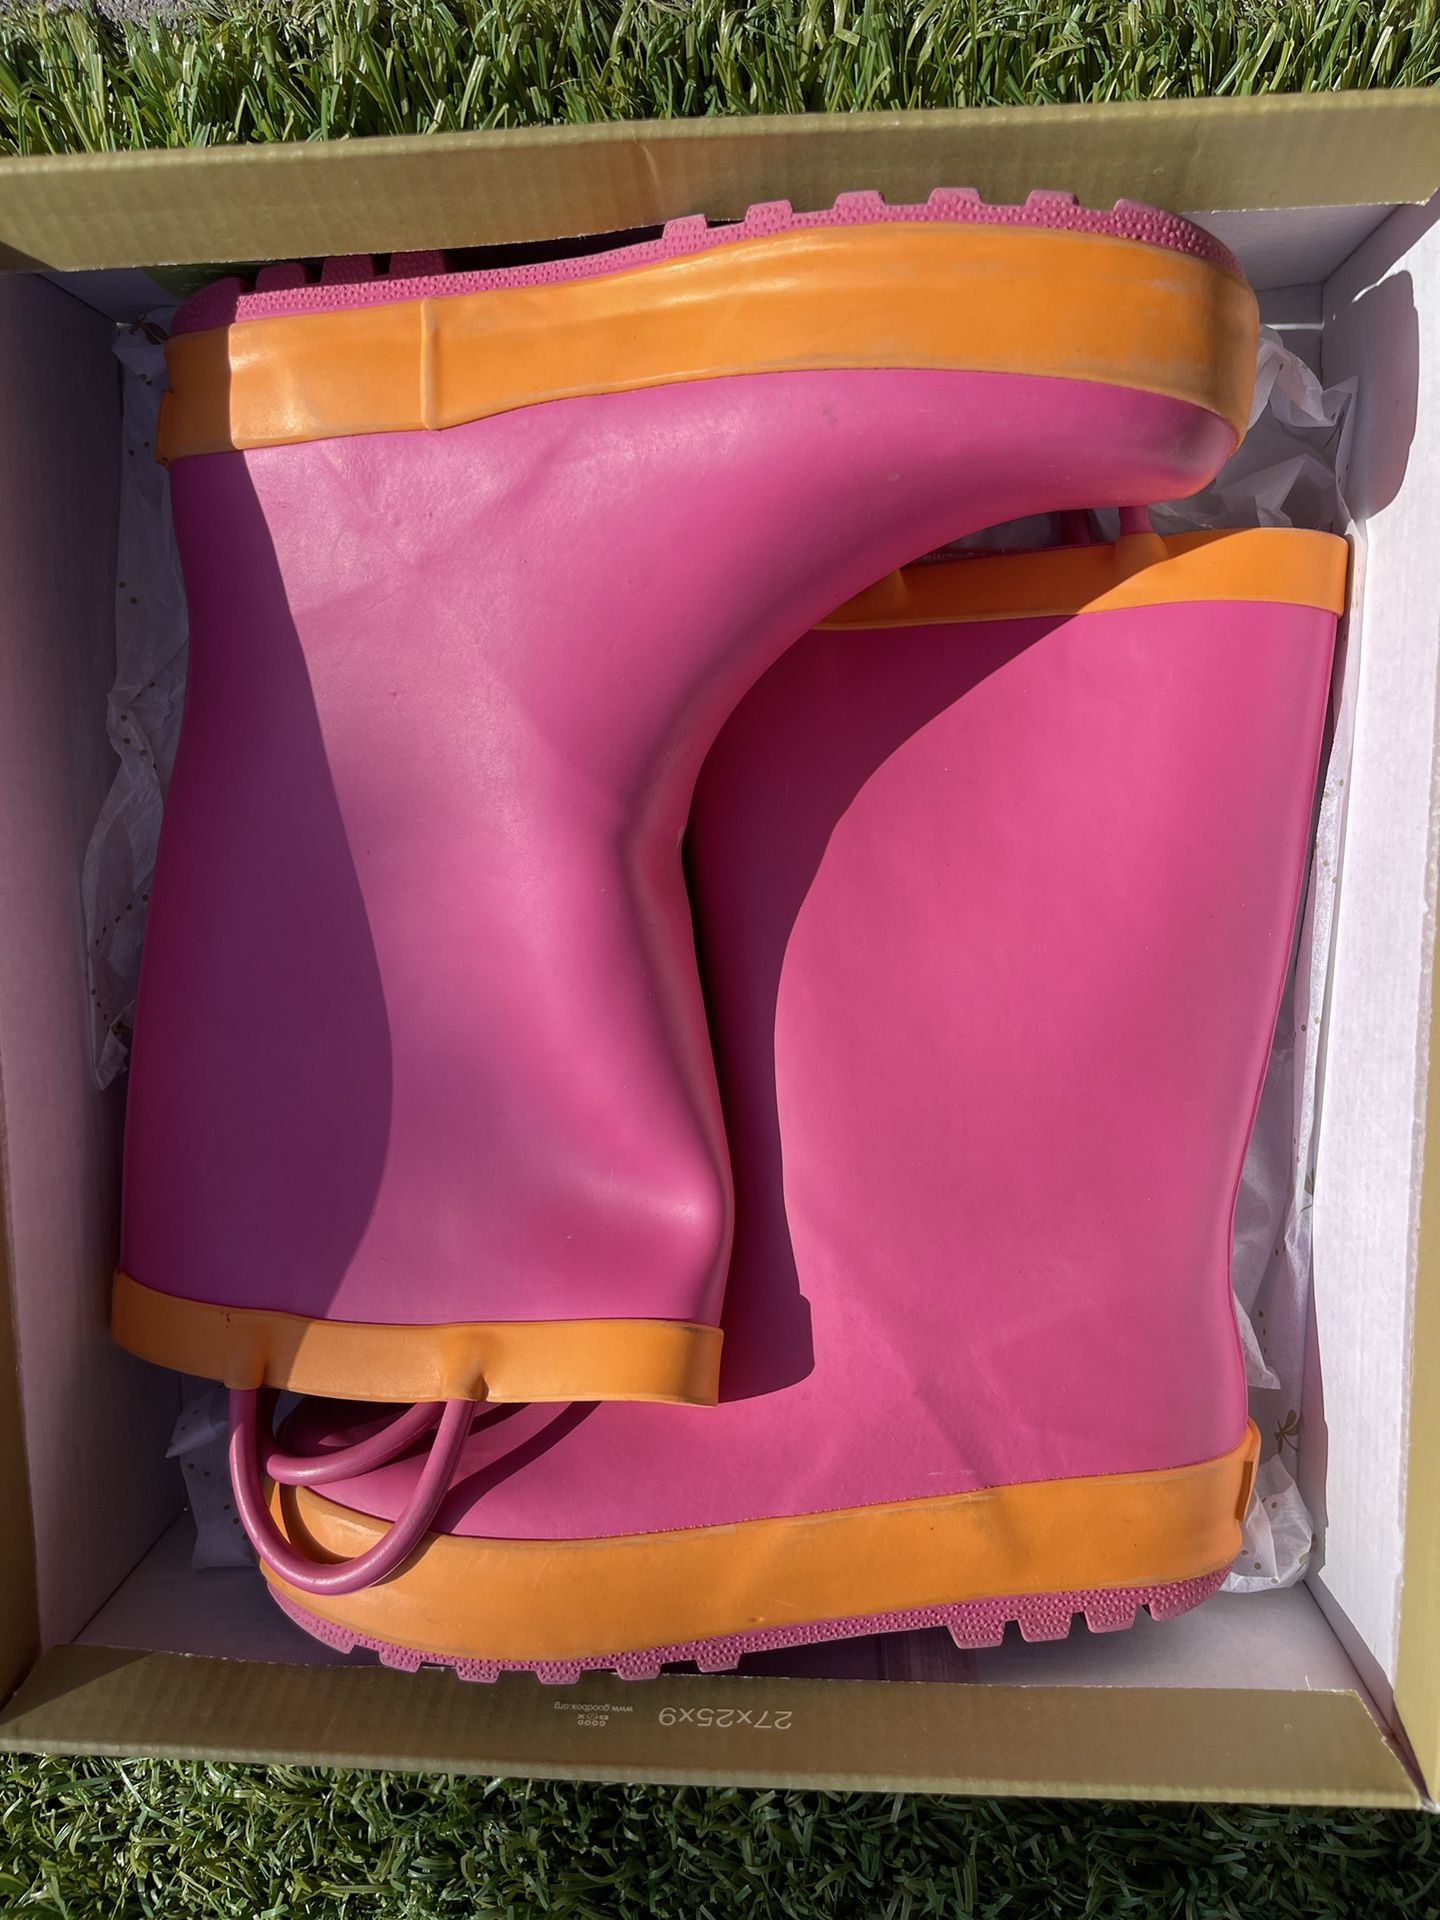 Girls Pink Rain Boots